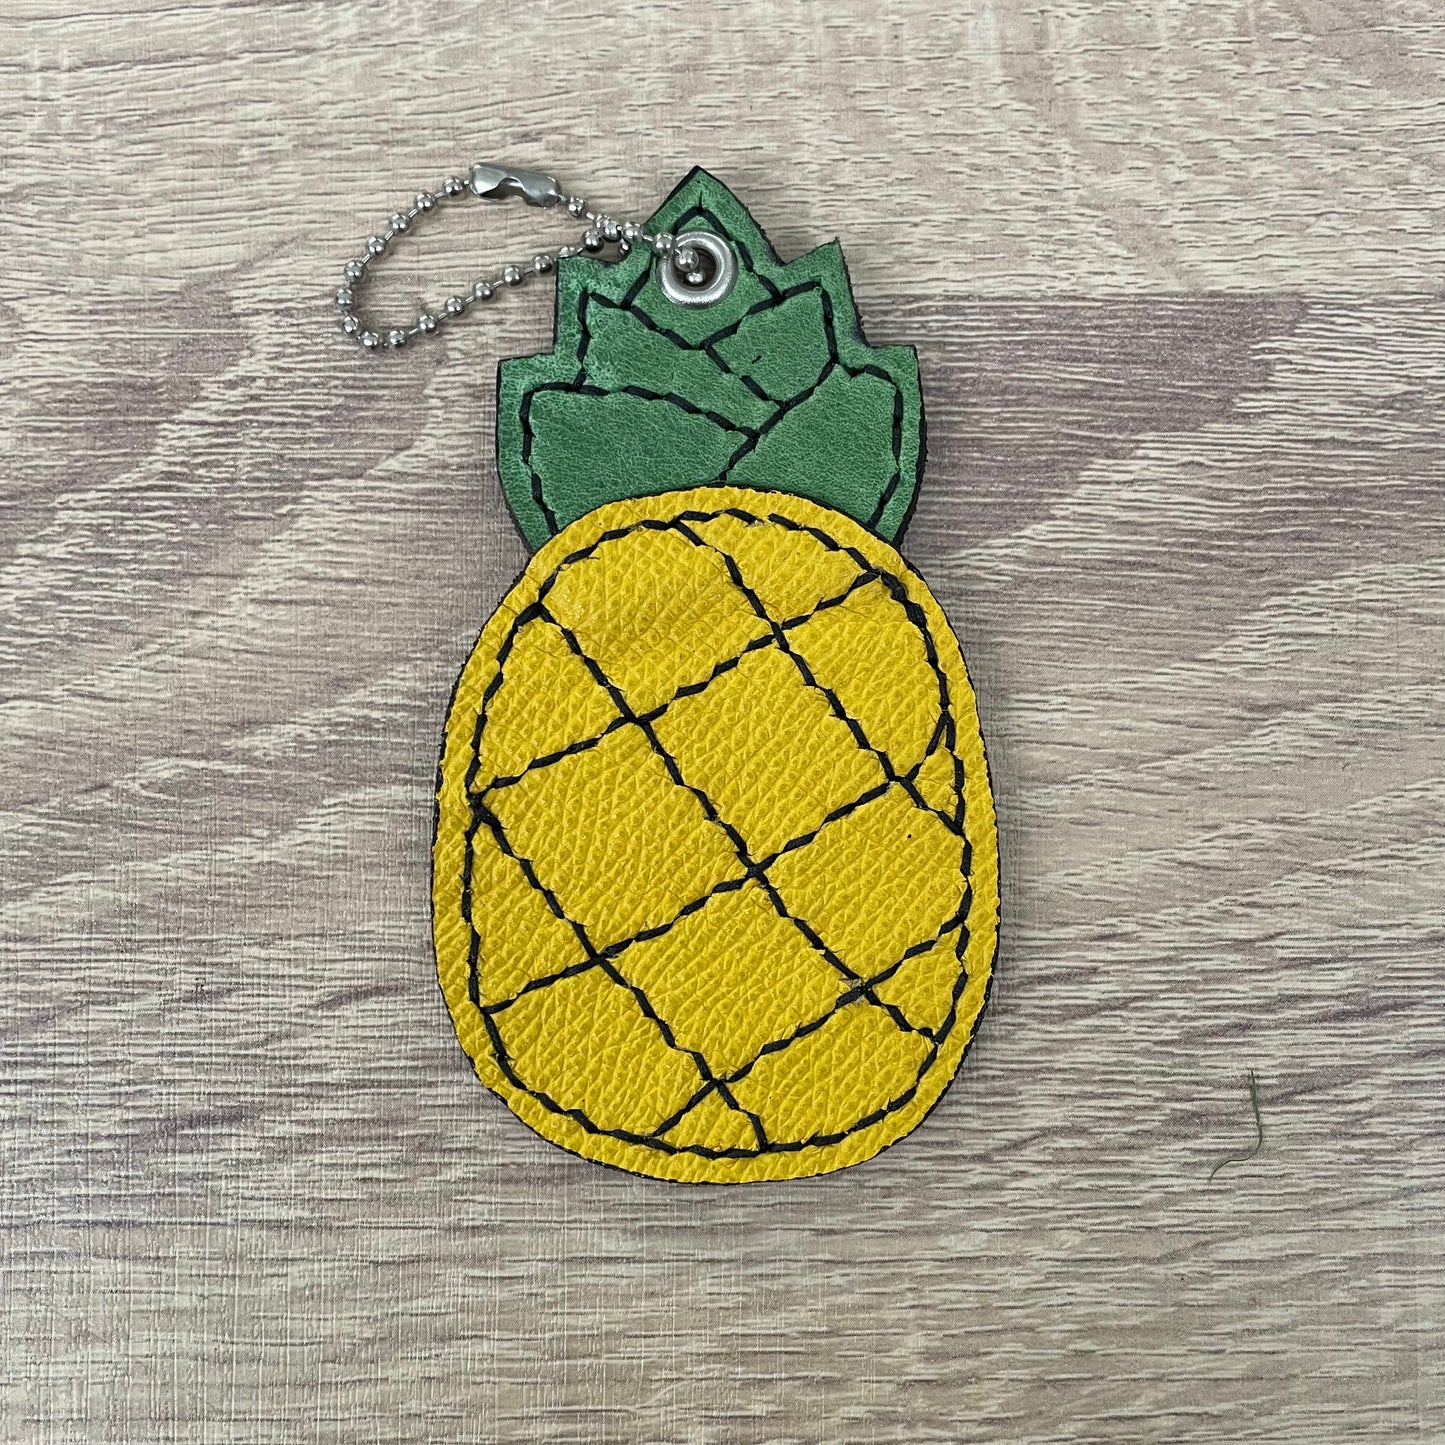 Pineapple Hand-Stitched Keychain Charm Ornament